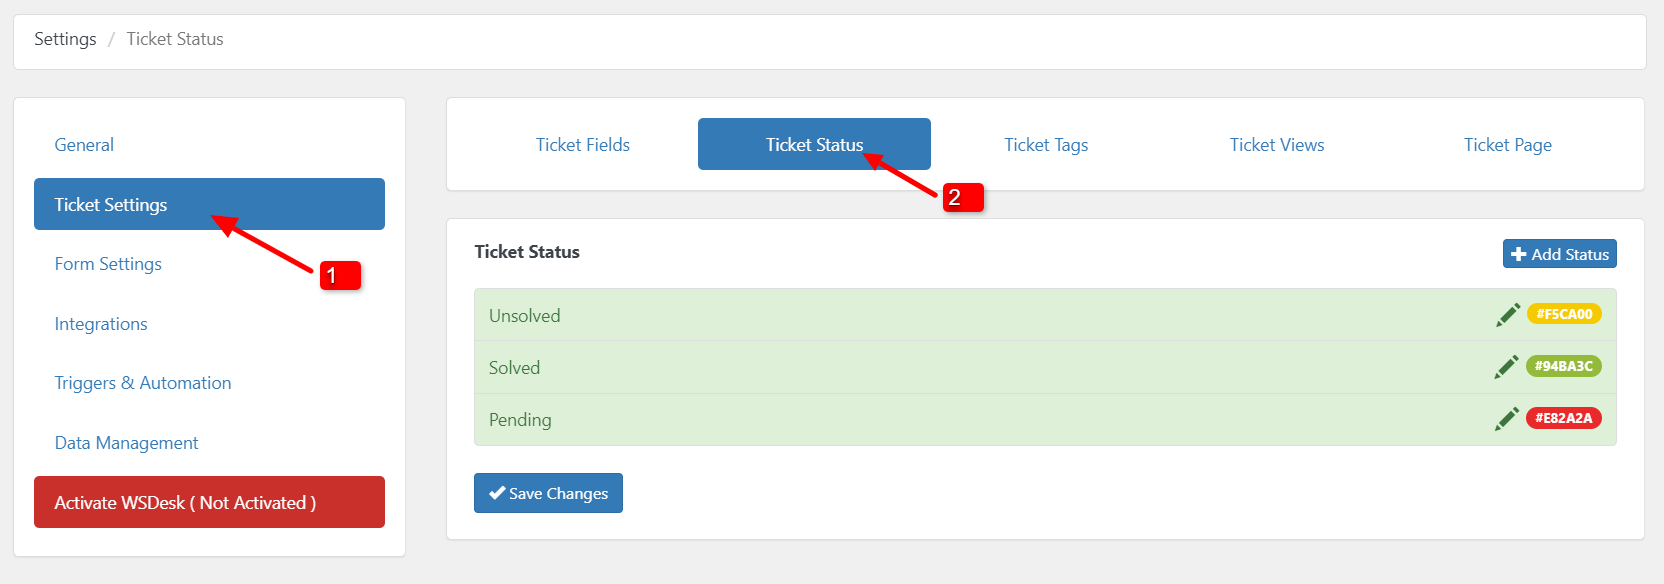 Ticket Status | Helpdesk Ticketing System